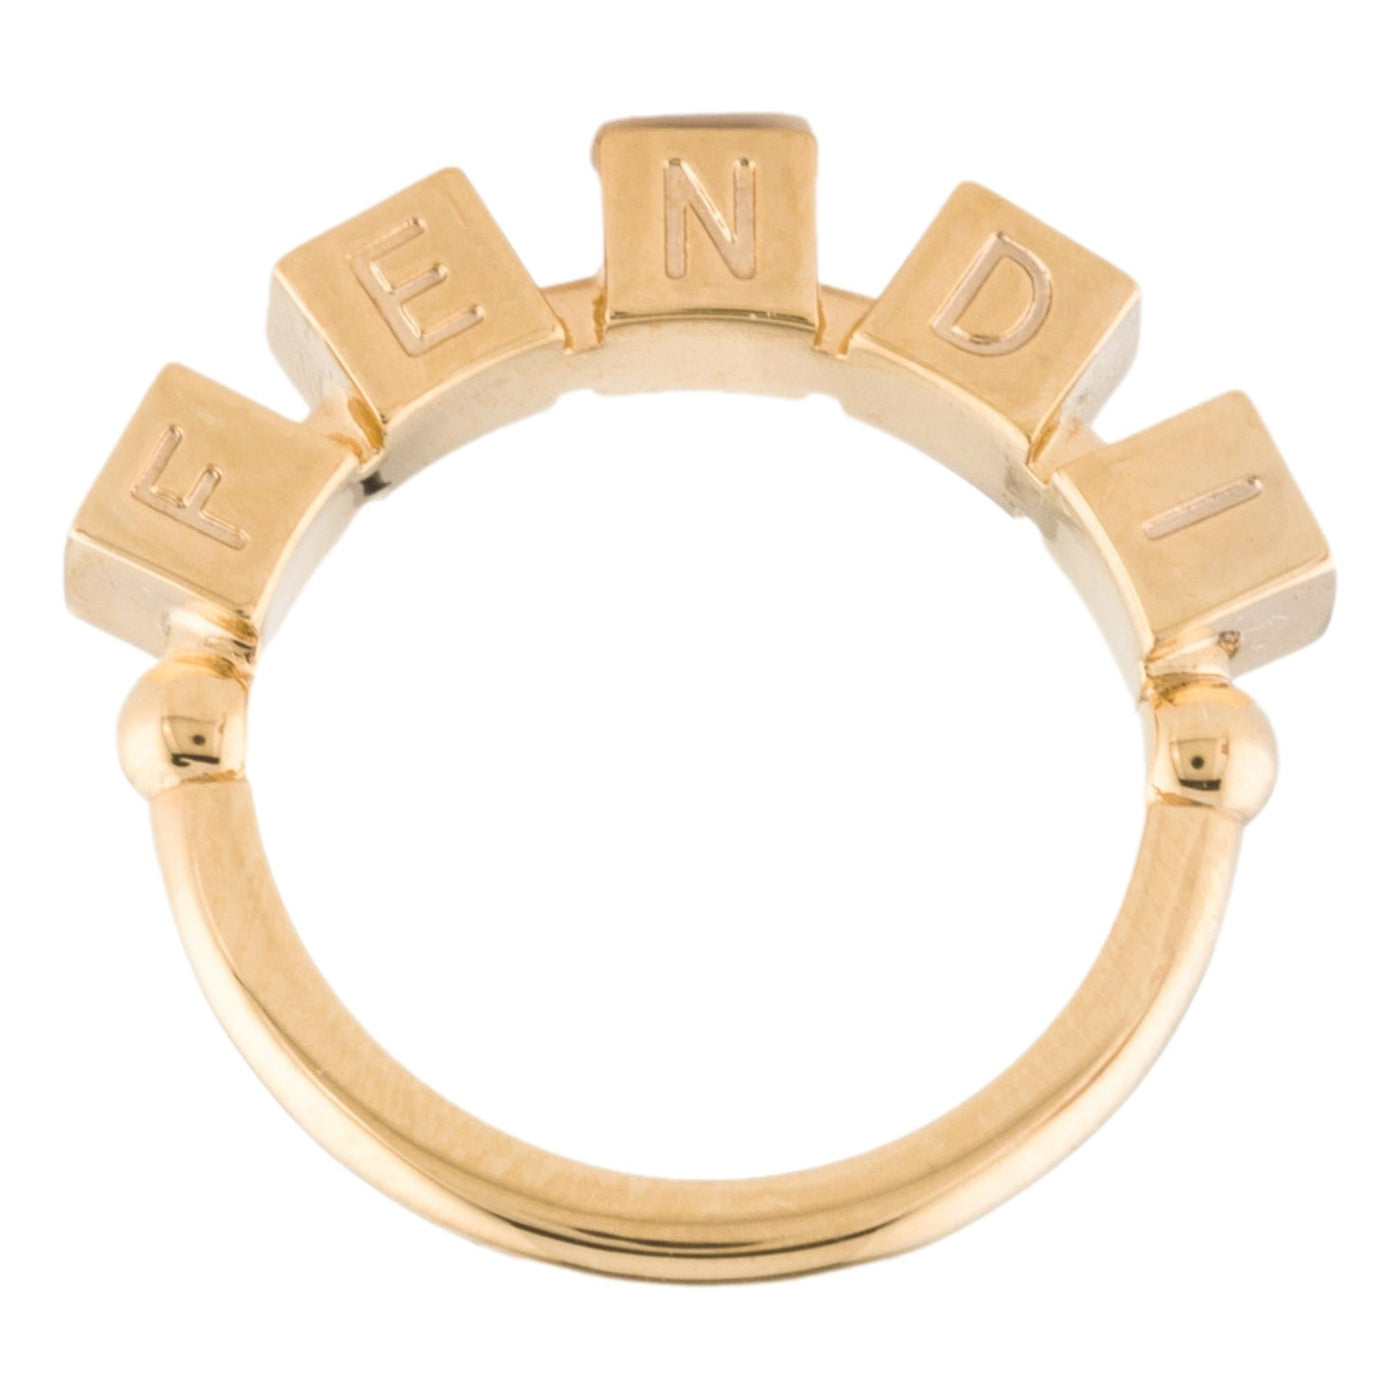 Fendi Fendrigraphy Letters Gold Metal Ring Size Medium - LUXURYMRKT